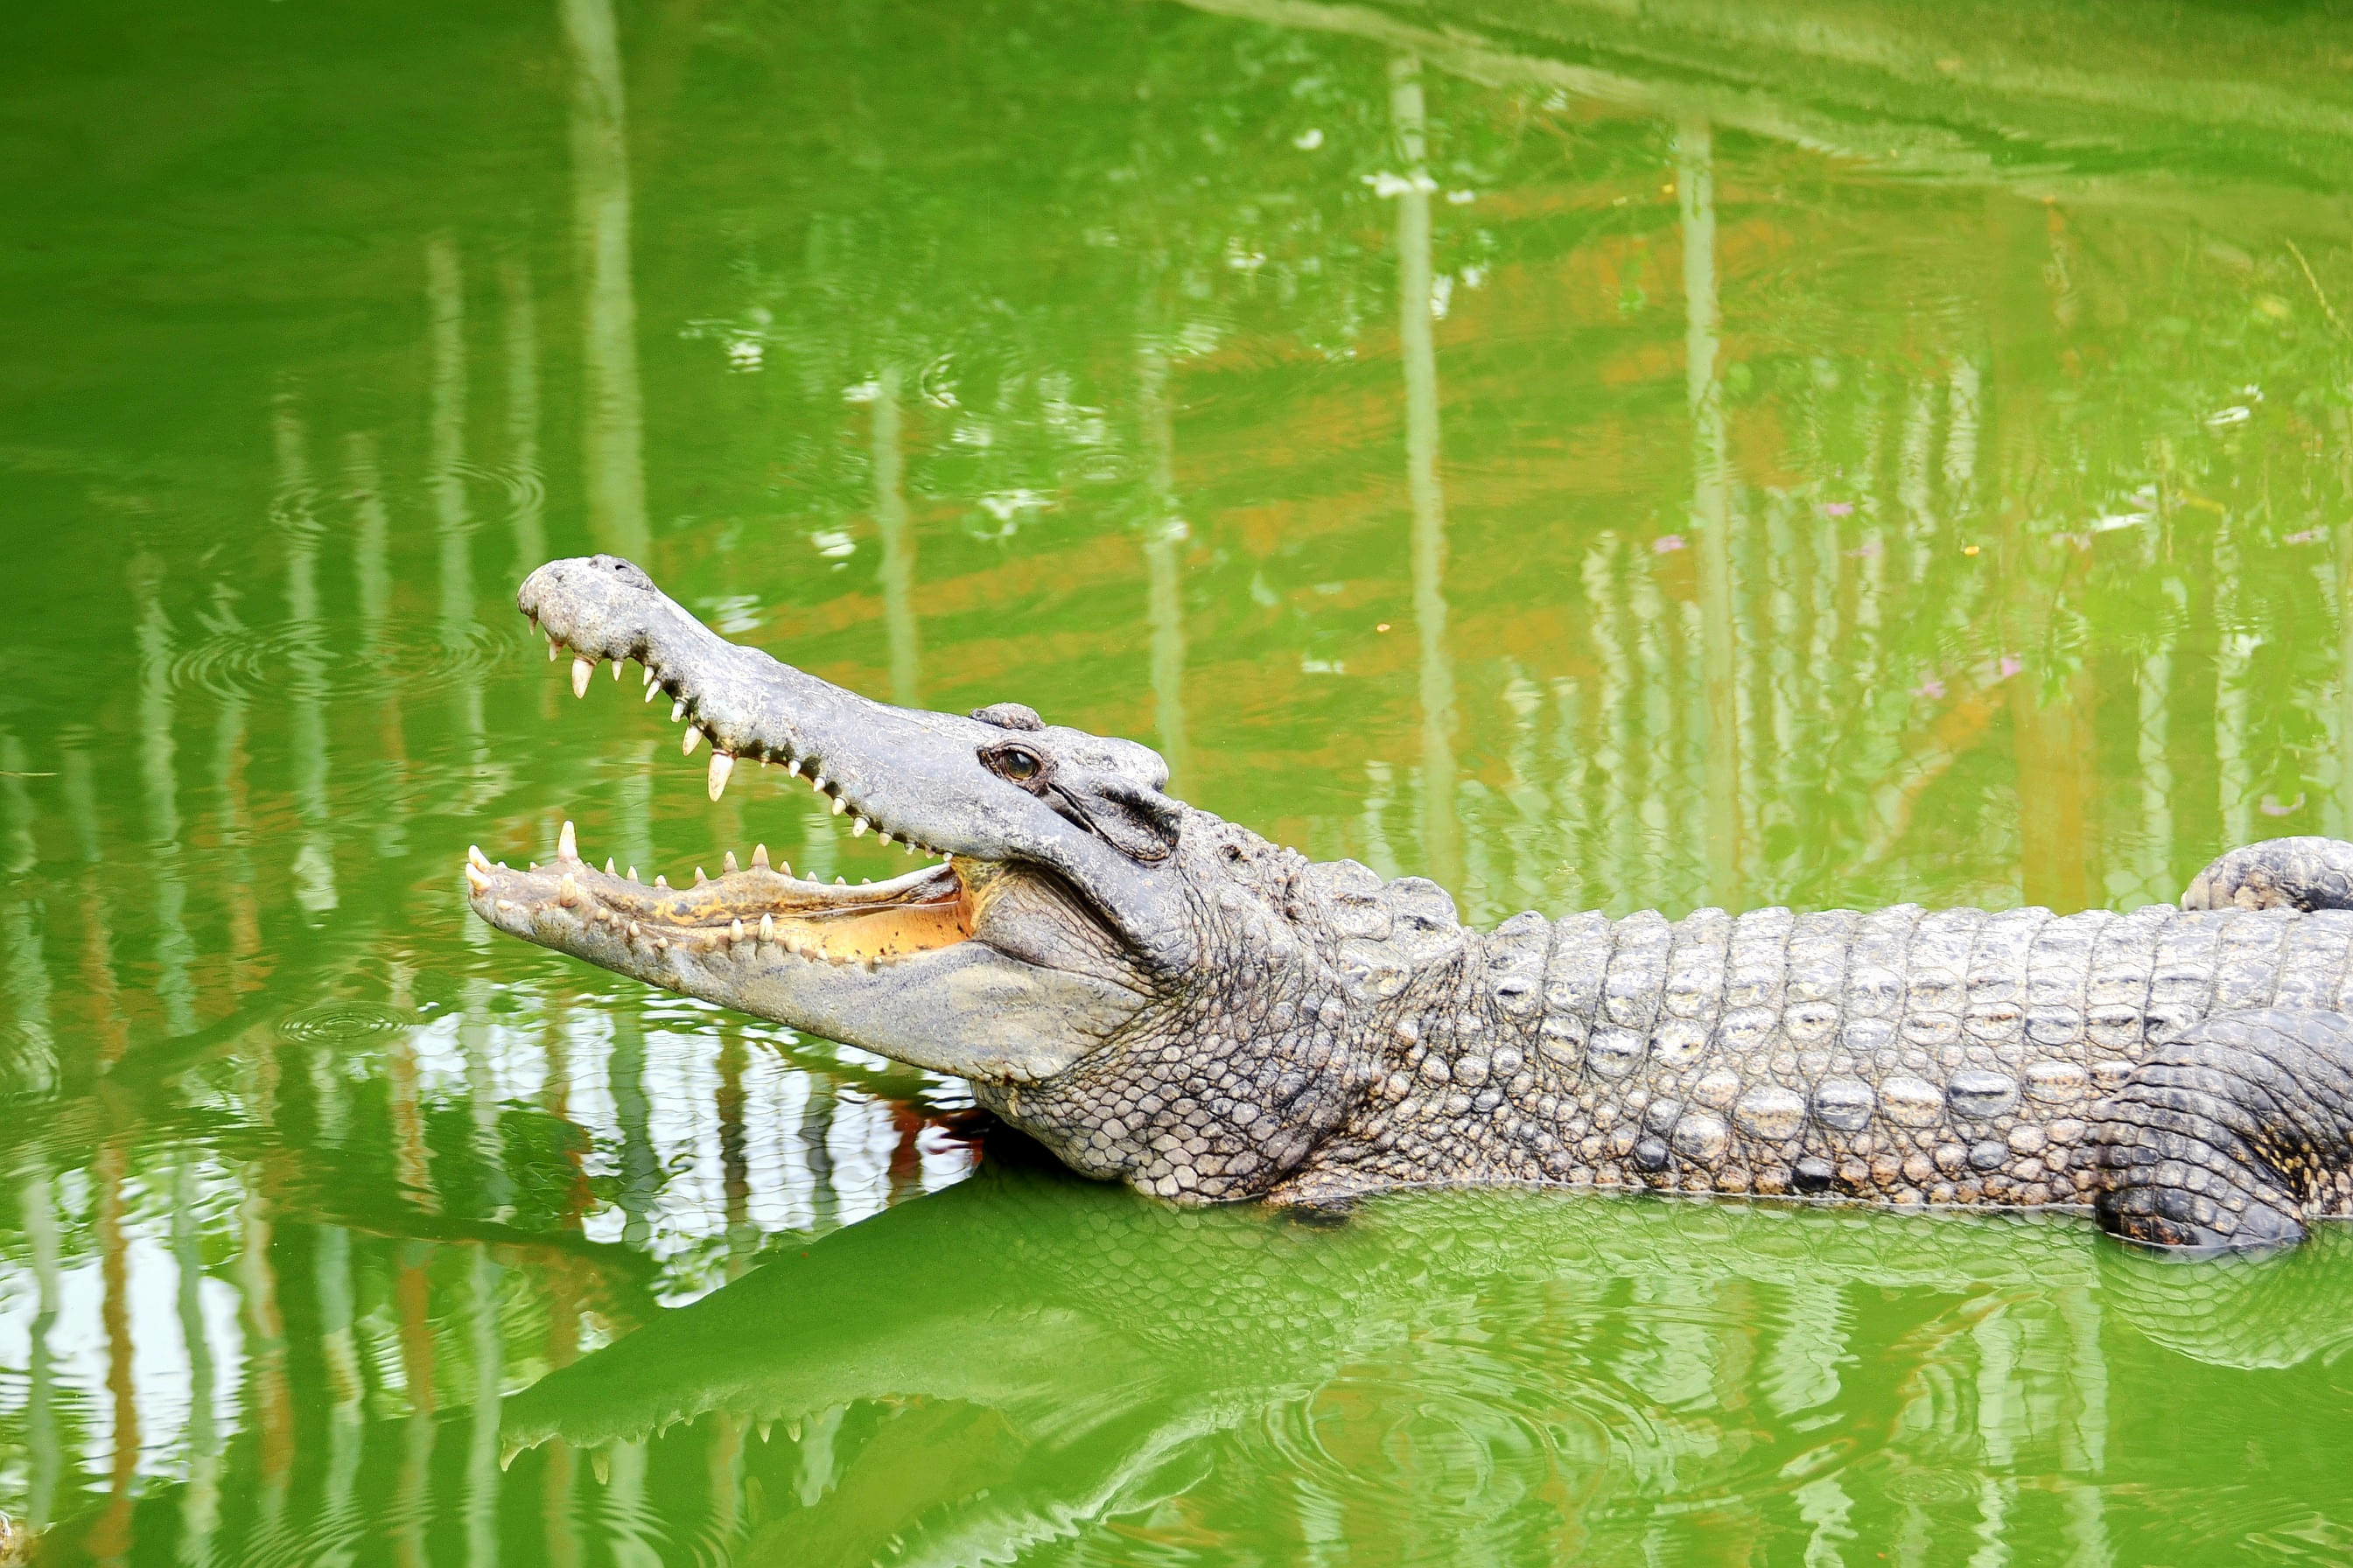 Crocodile Adventureland